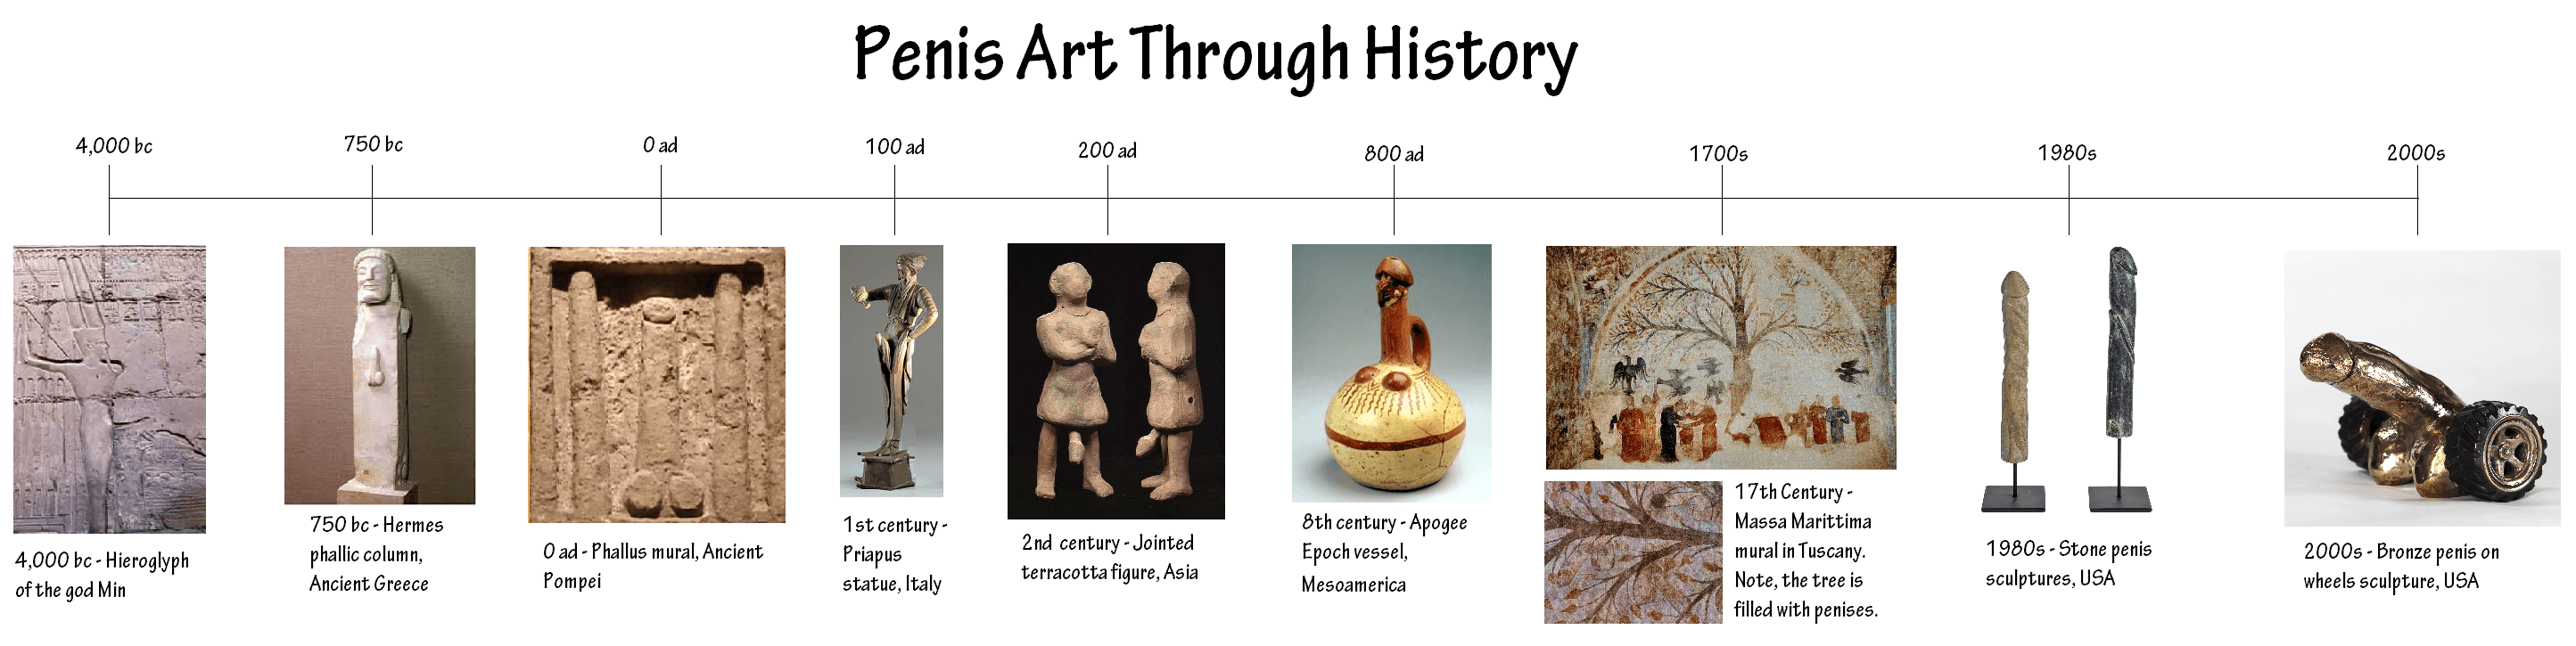 penis art timeline